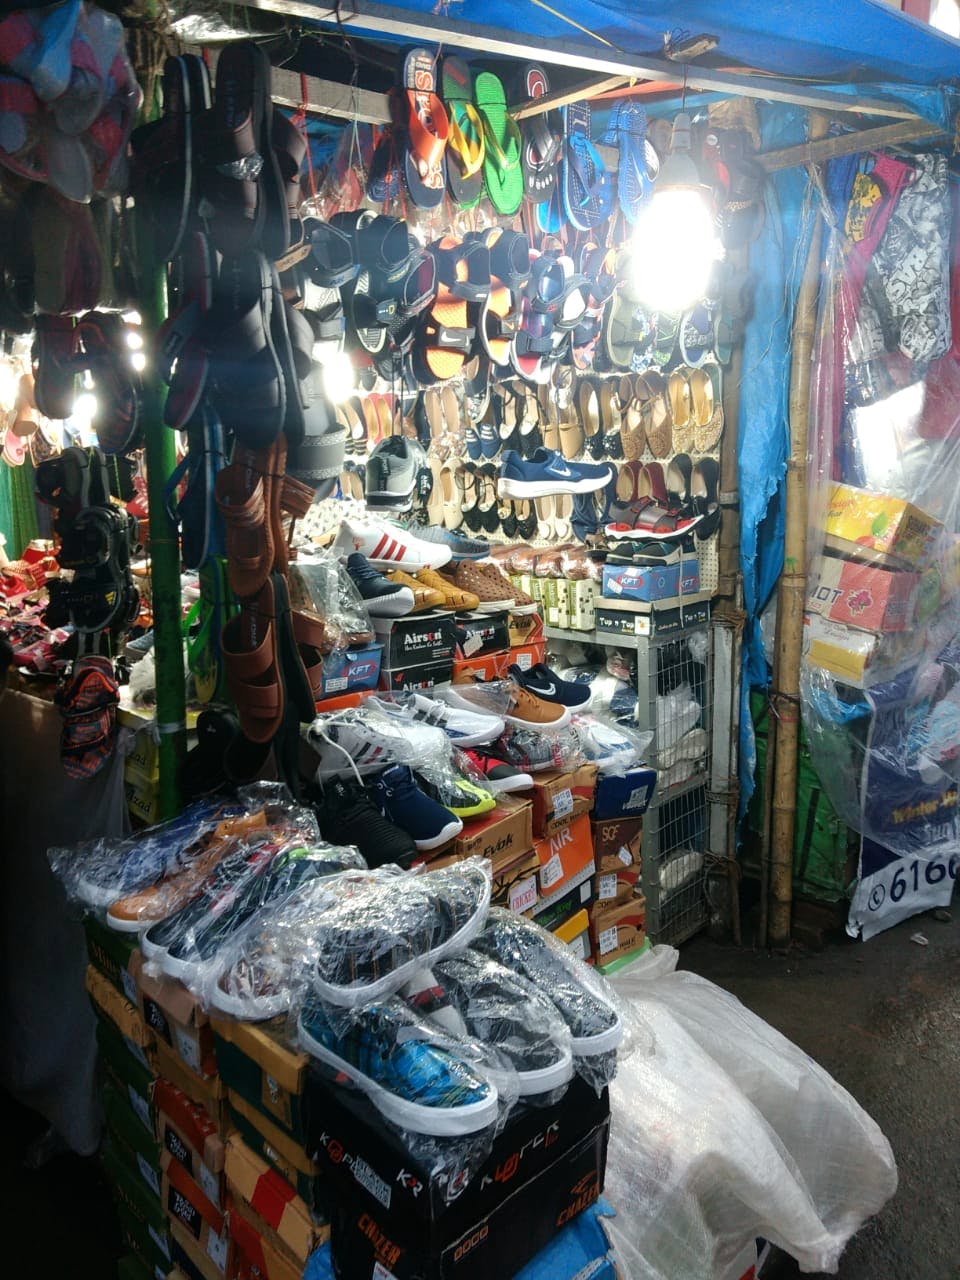 Market,Bazaar,Marketplace,Public space,Selling,Human settlement,City,Flea market,Retail,Building